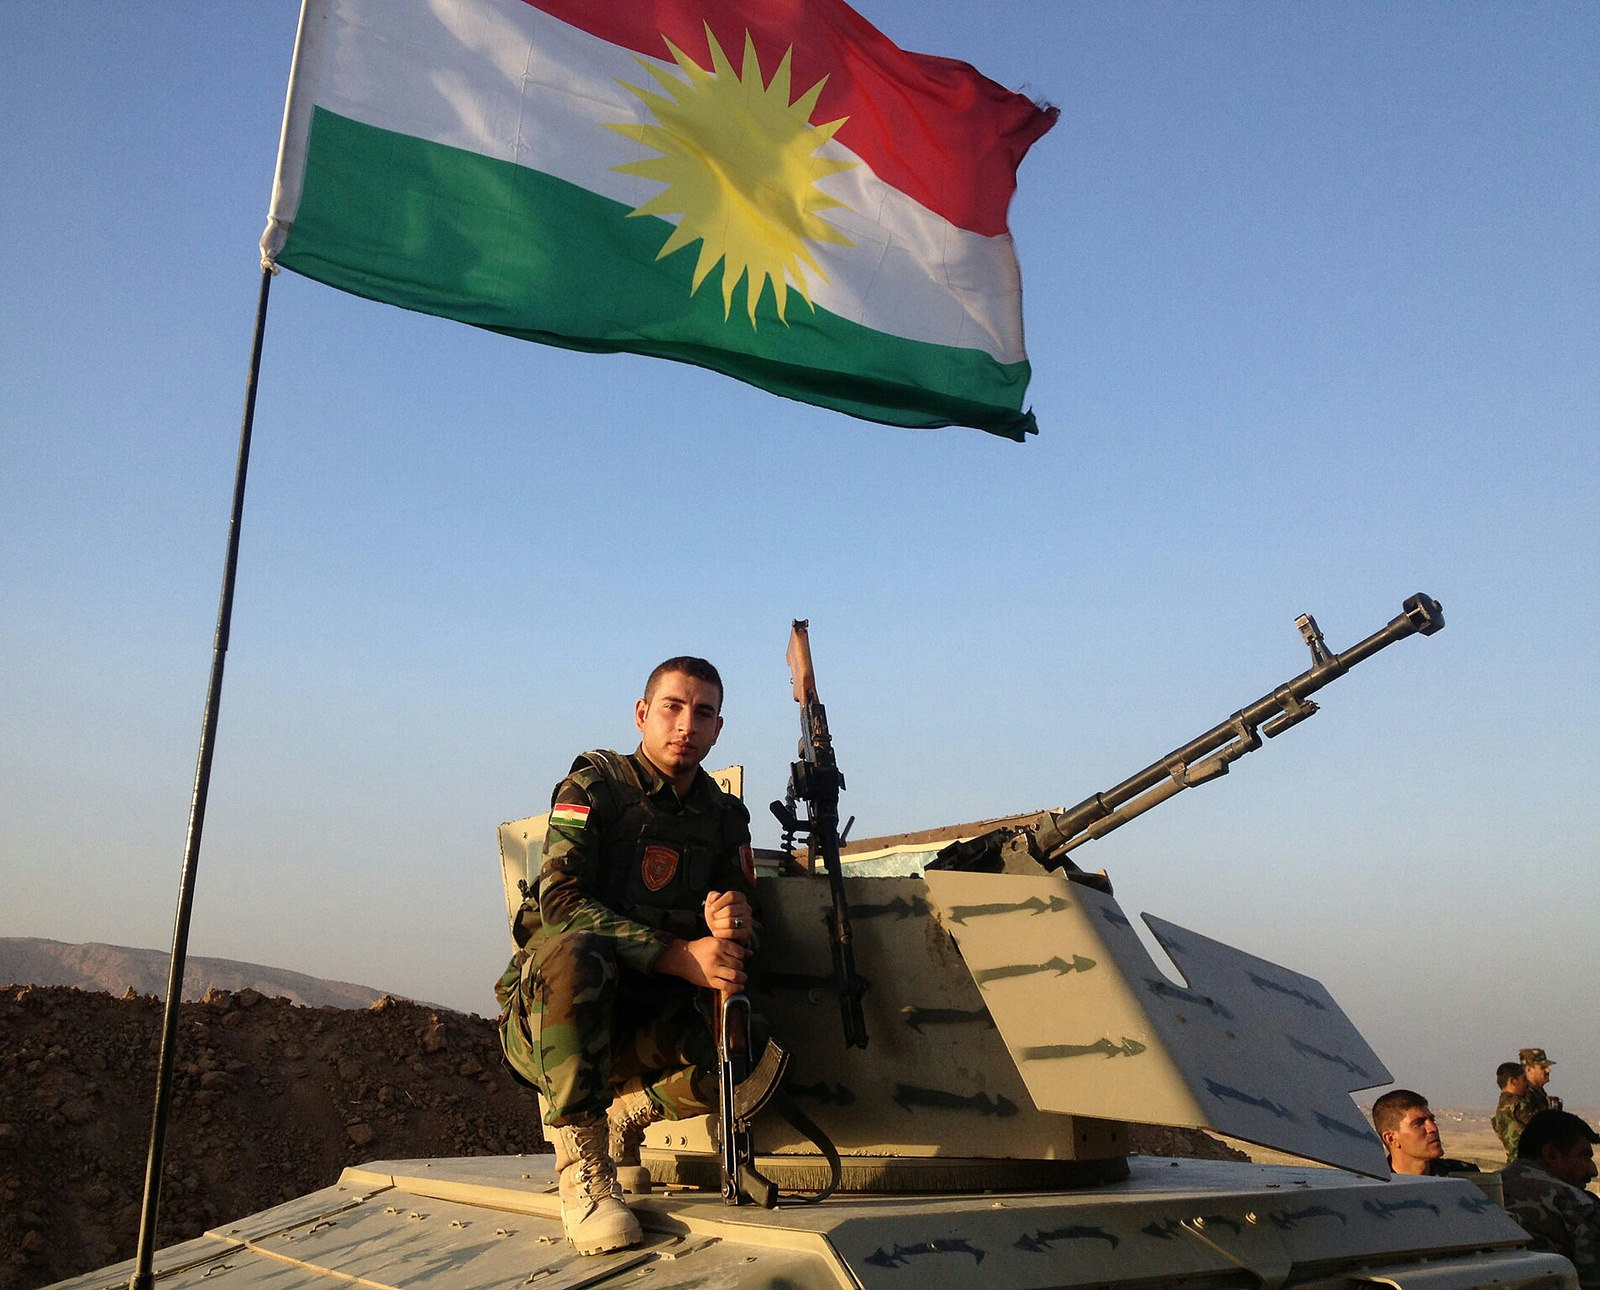 An Iraqi Kurdistan Peshmerga fighter.